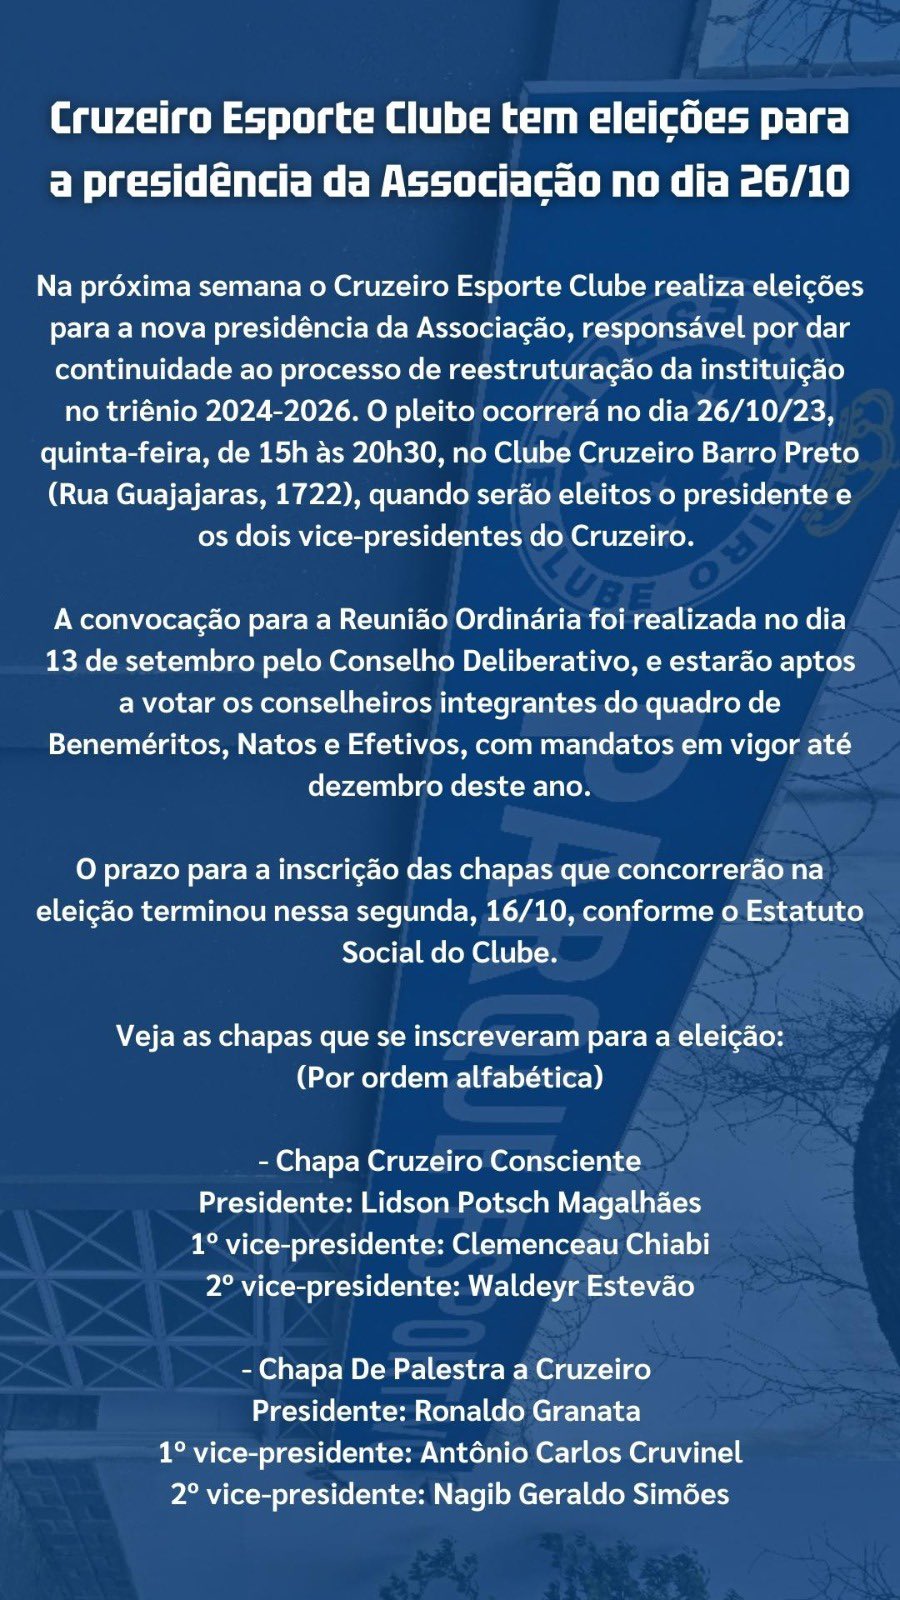 Clube Cruzeiro Barro Preto - Clubes do Cruzeiro